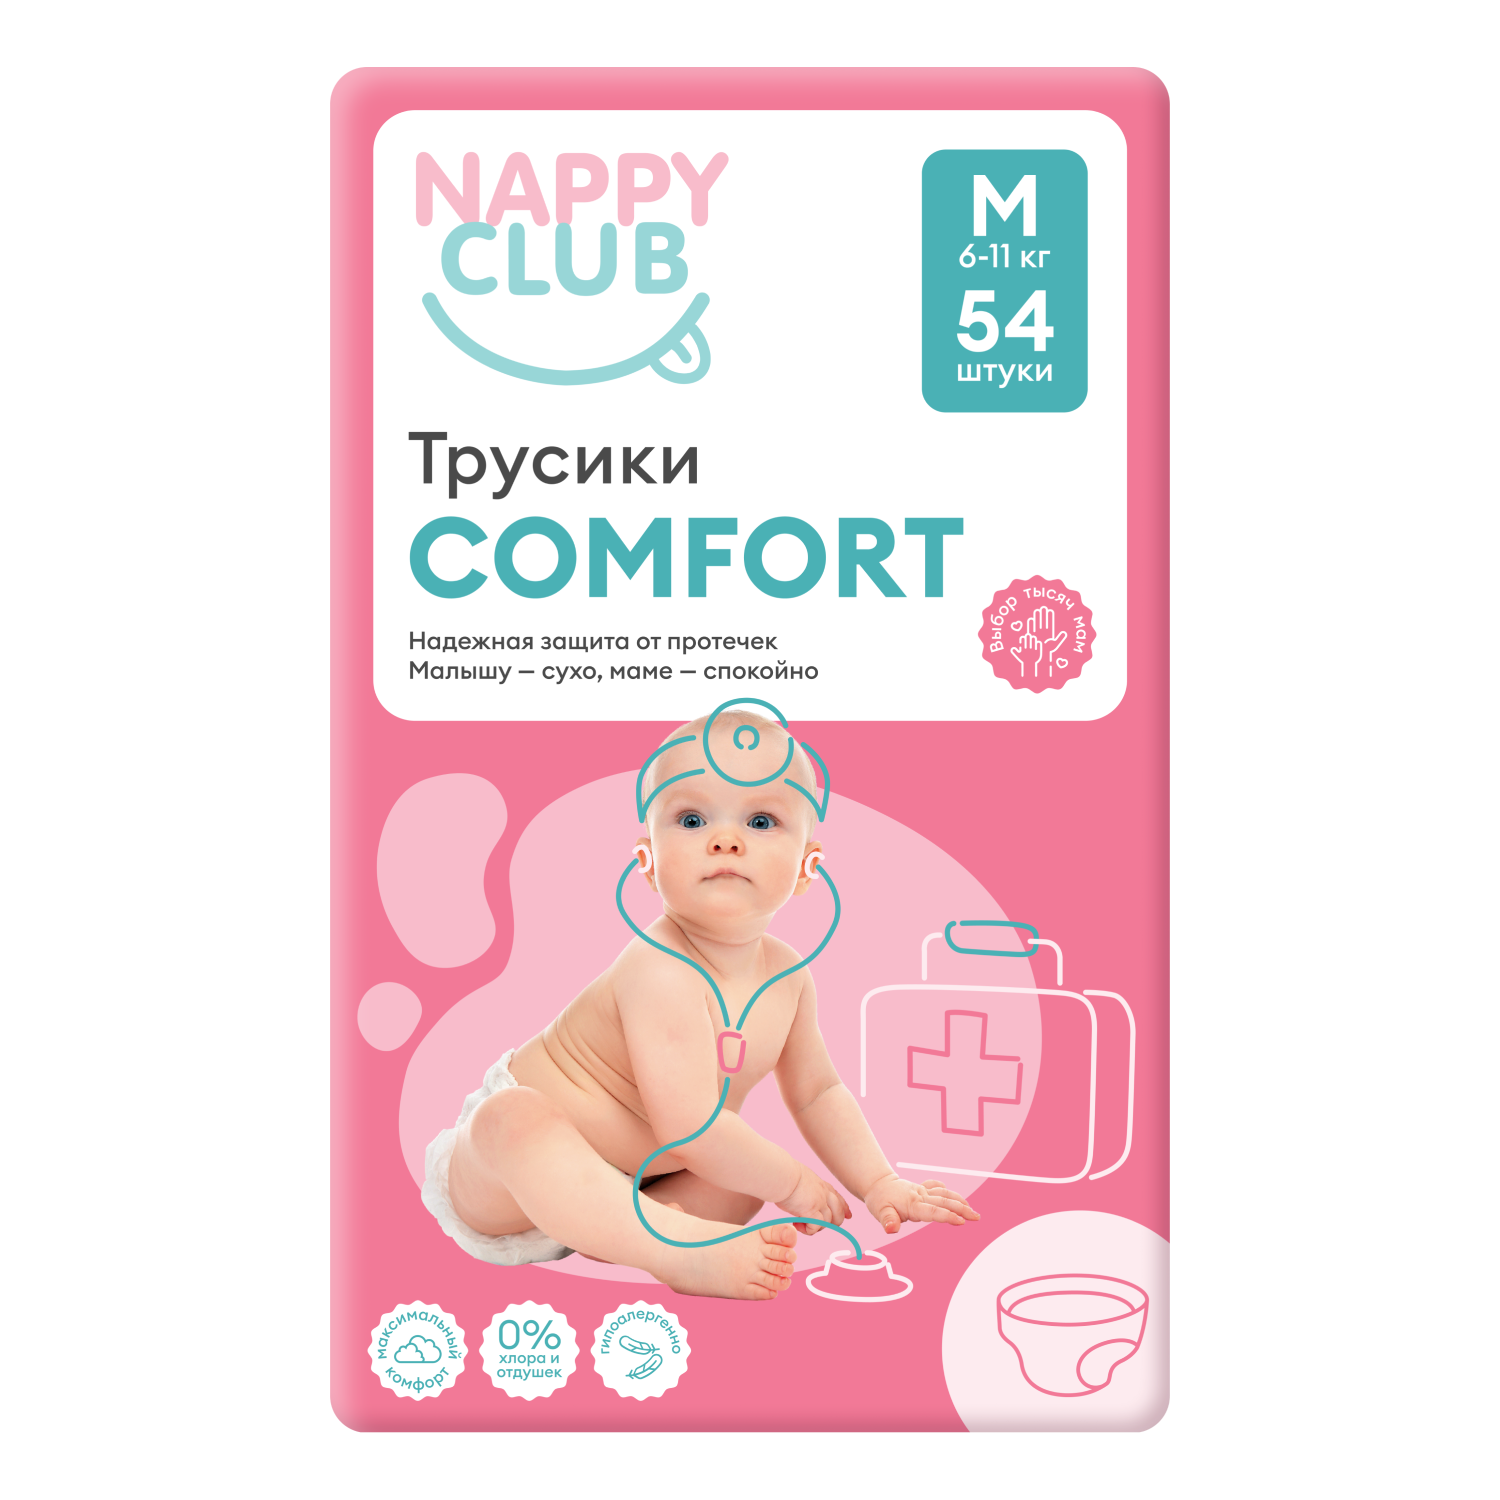 NappyClub трусики Comfort M (6-11 кг) 54 шт.